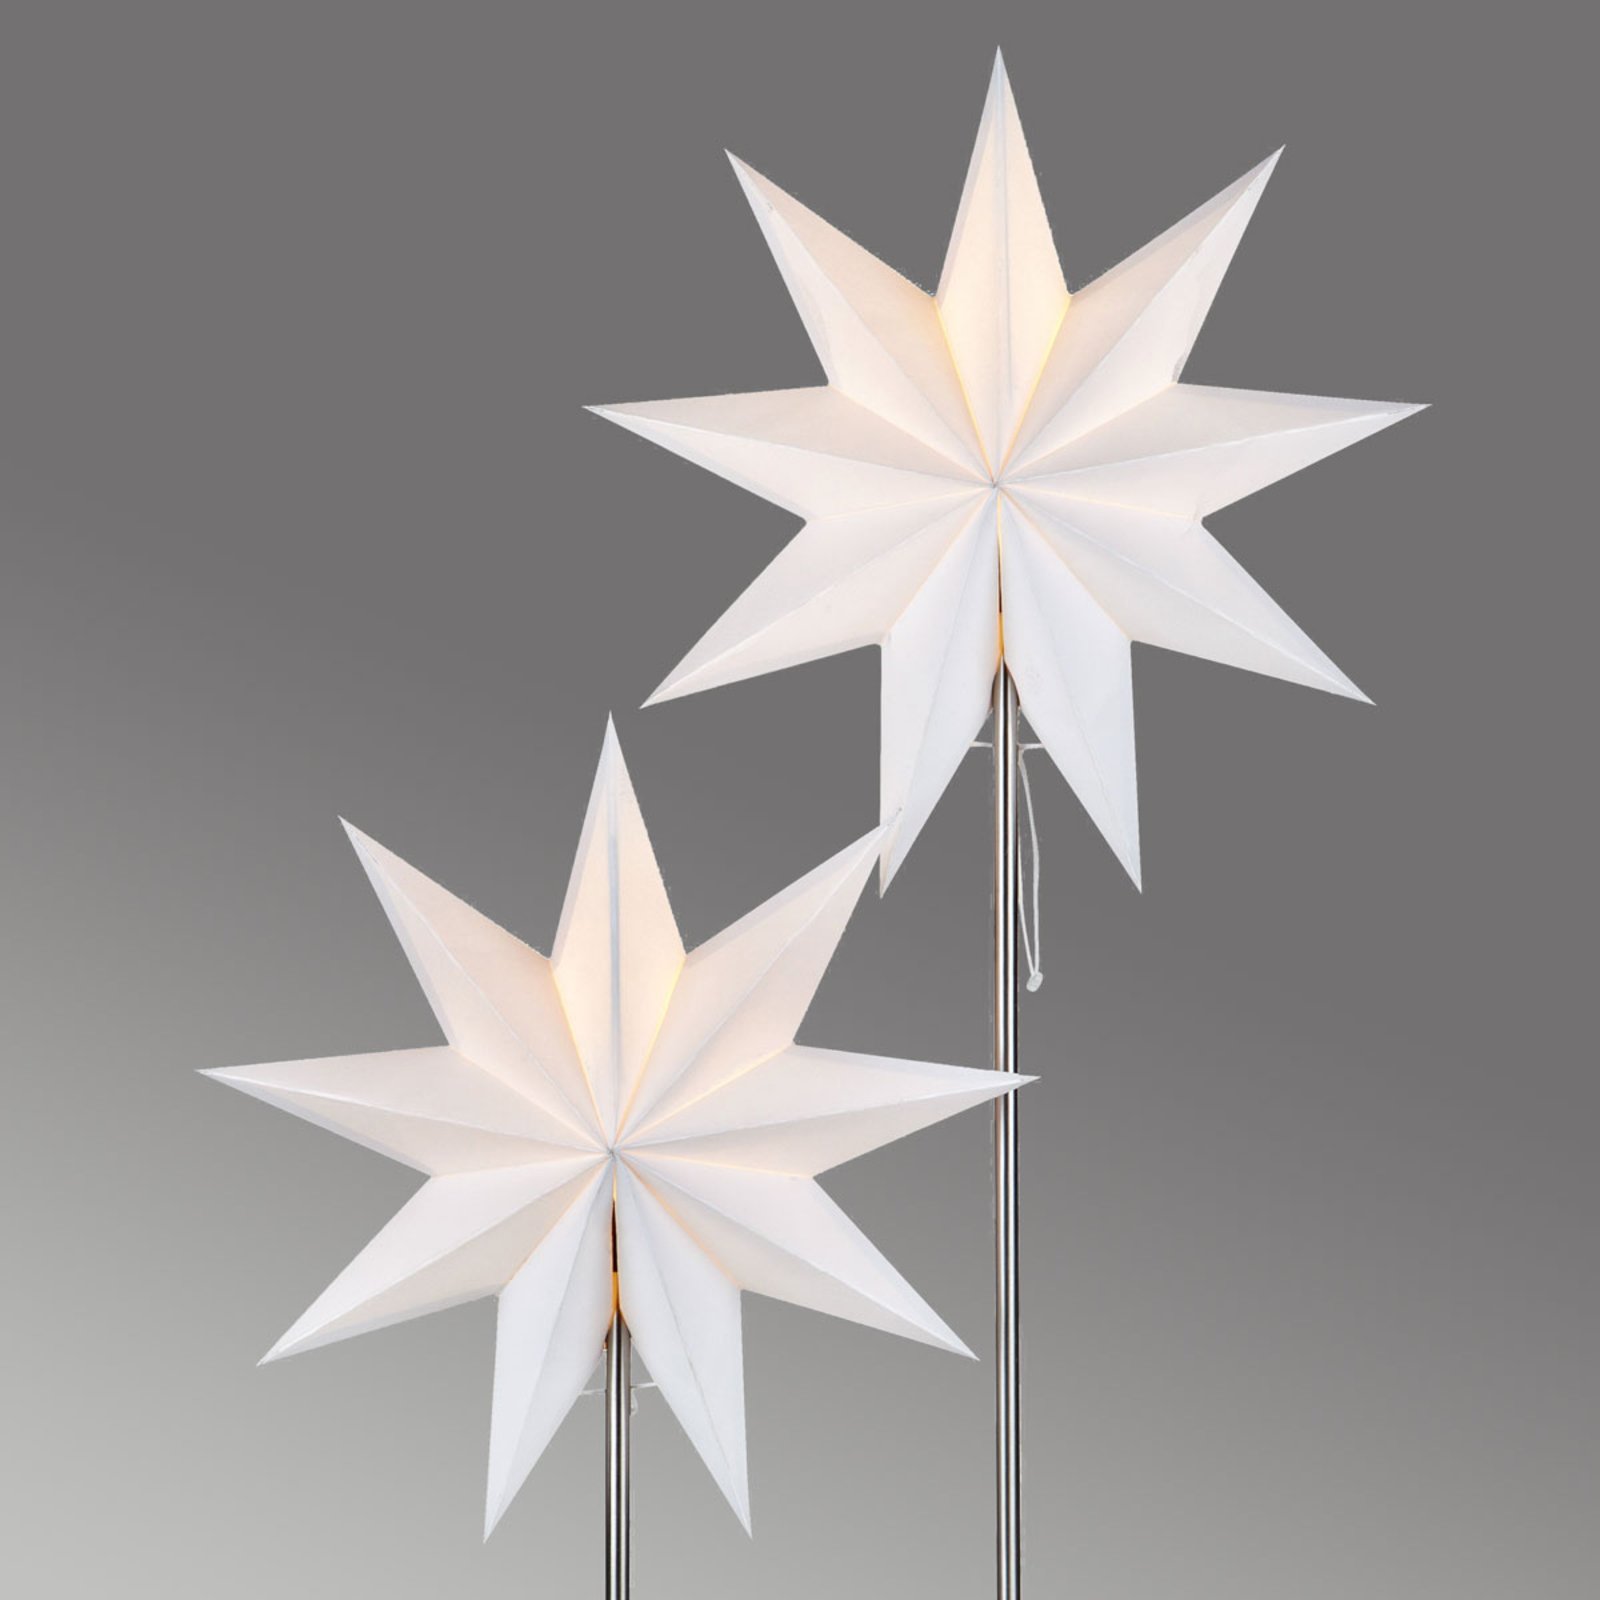 Lámpara de mesa estrella de papel Duva 2 estrellas